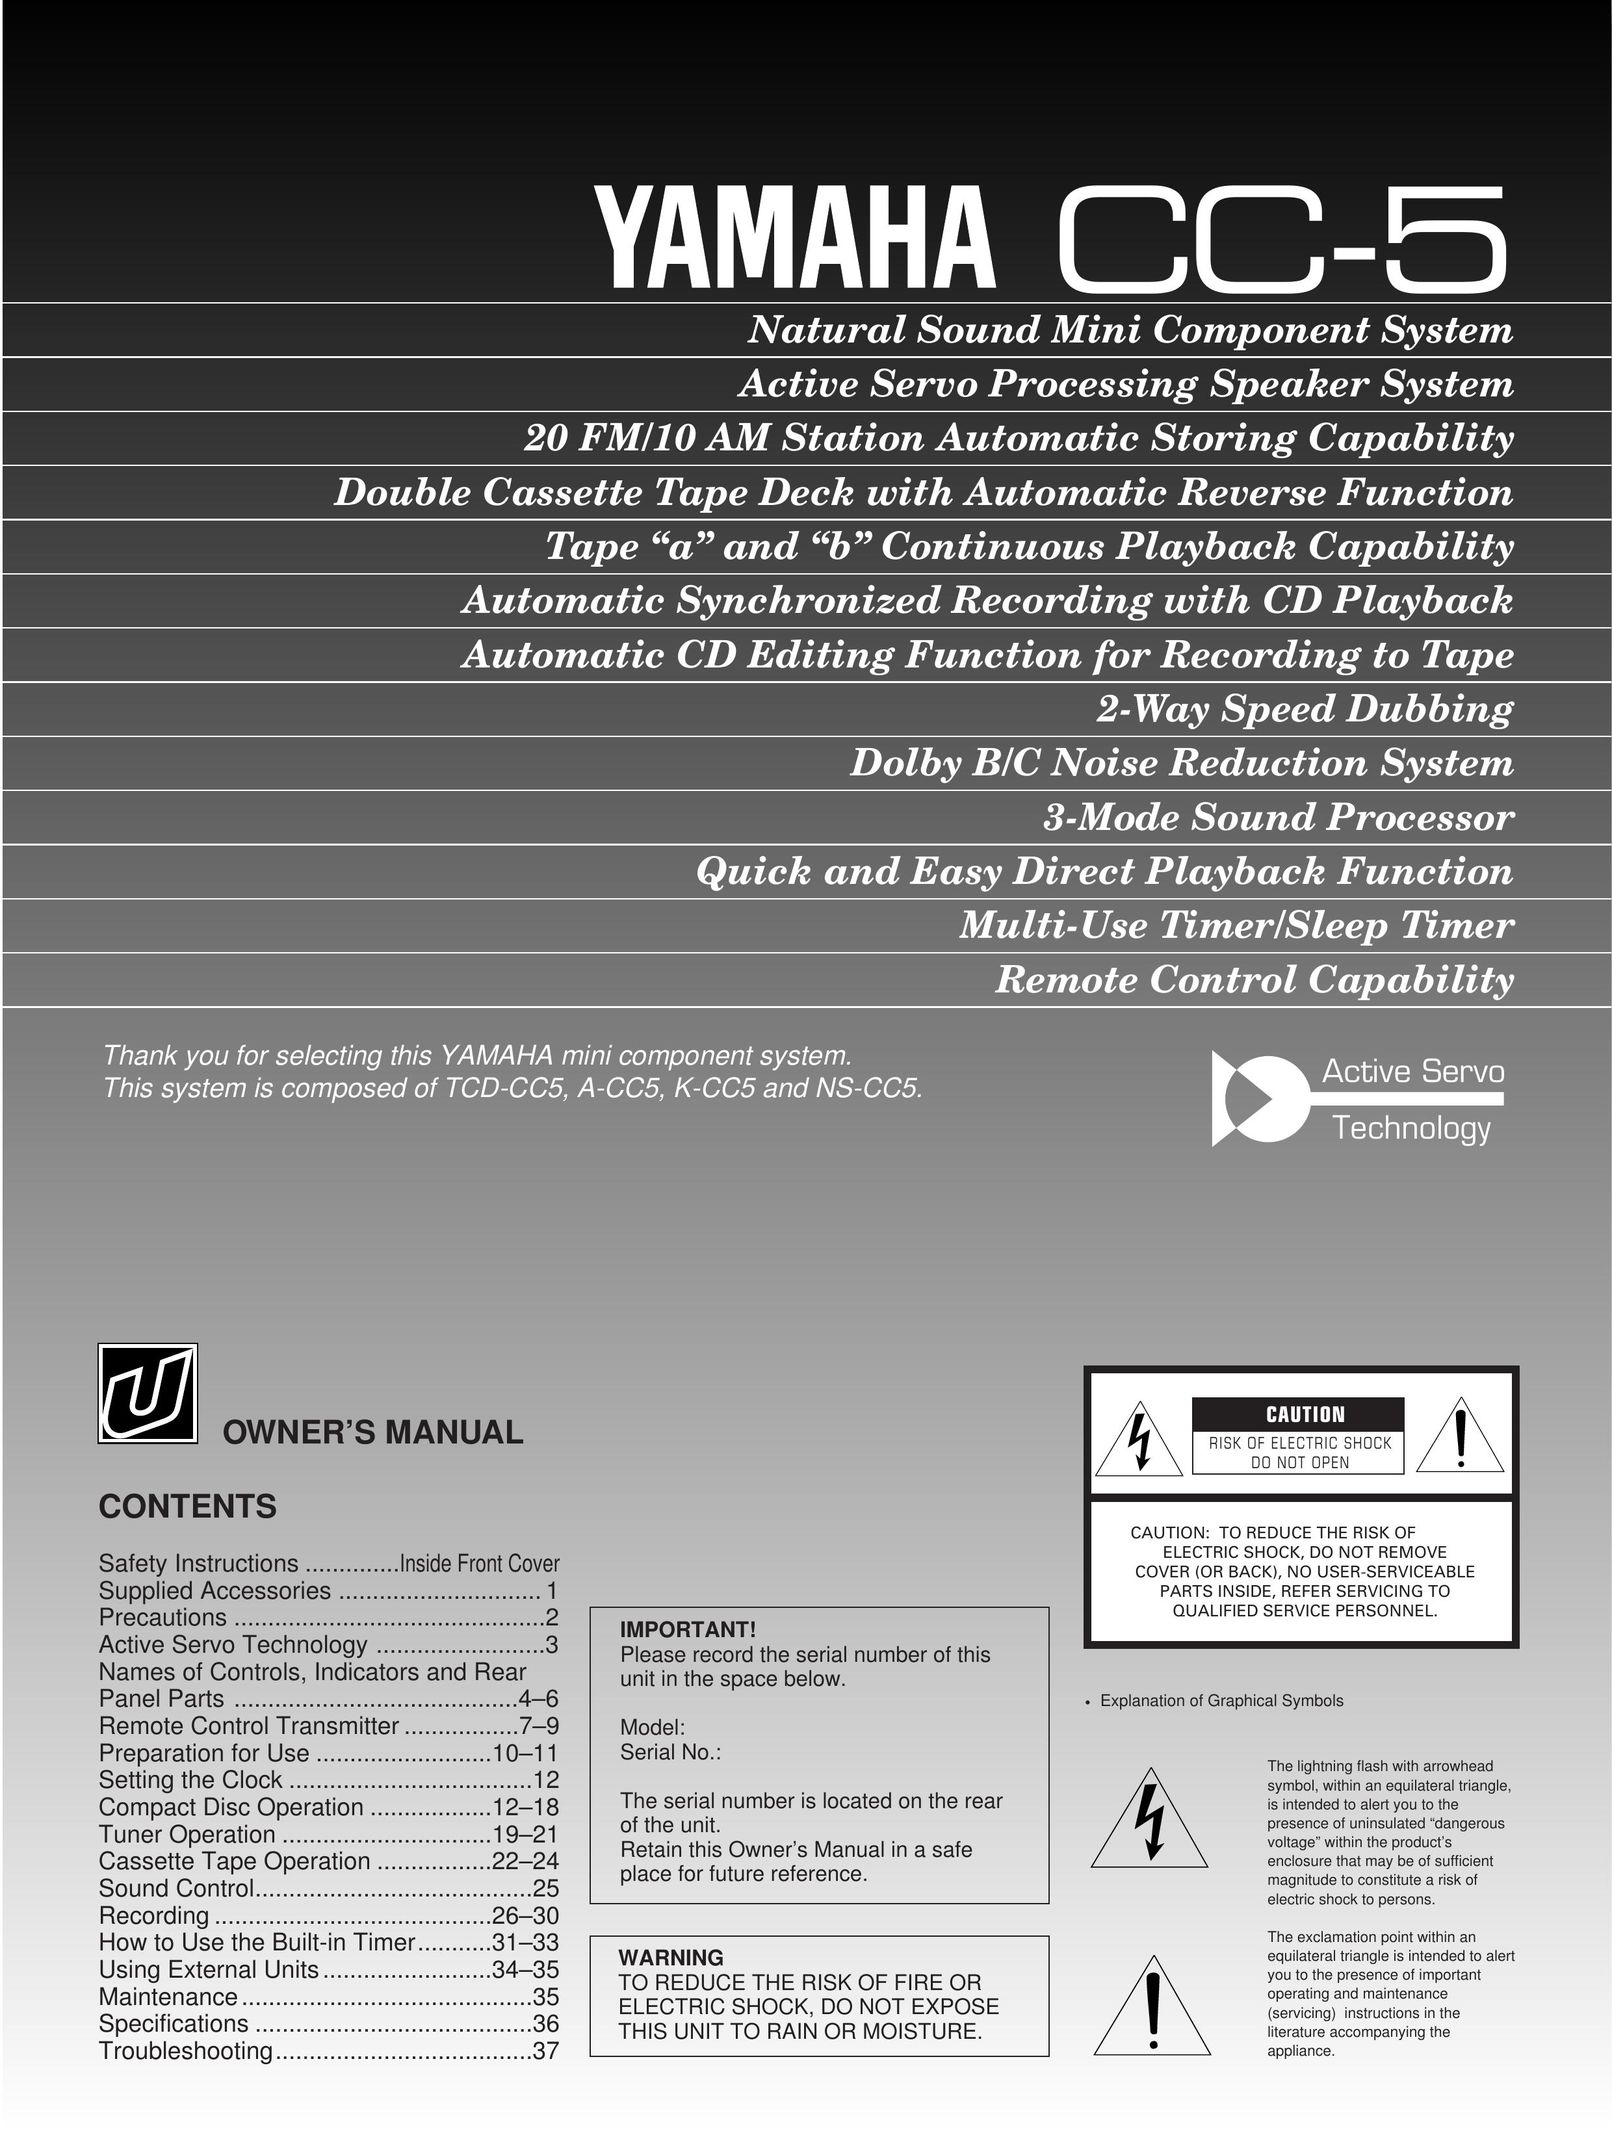 Yamaha CC-5 Speaker System User Manual